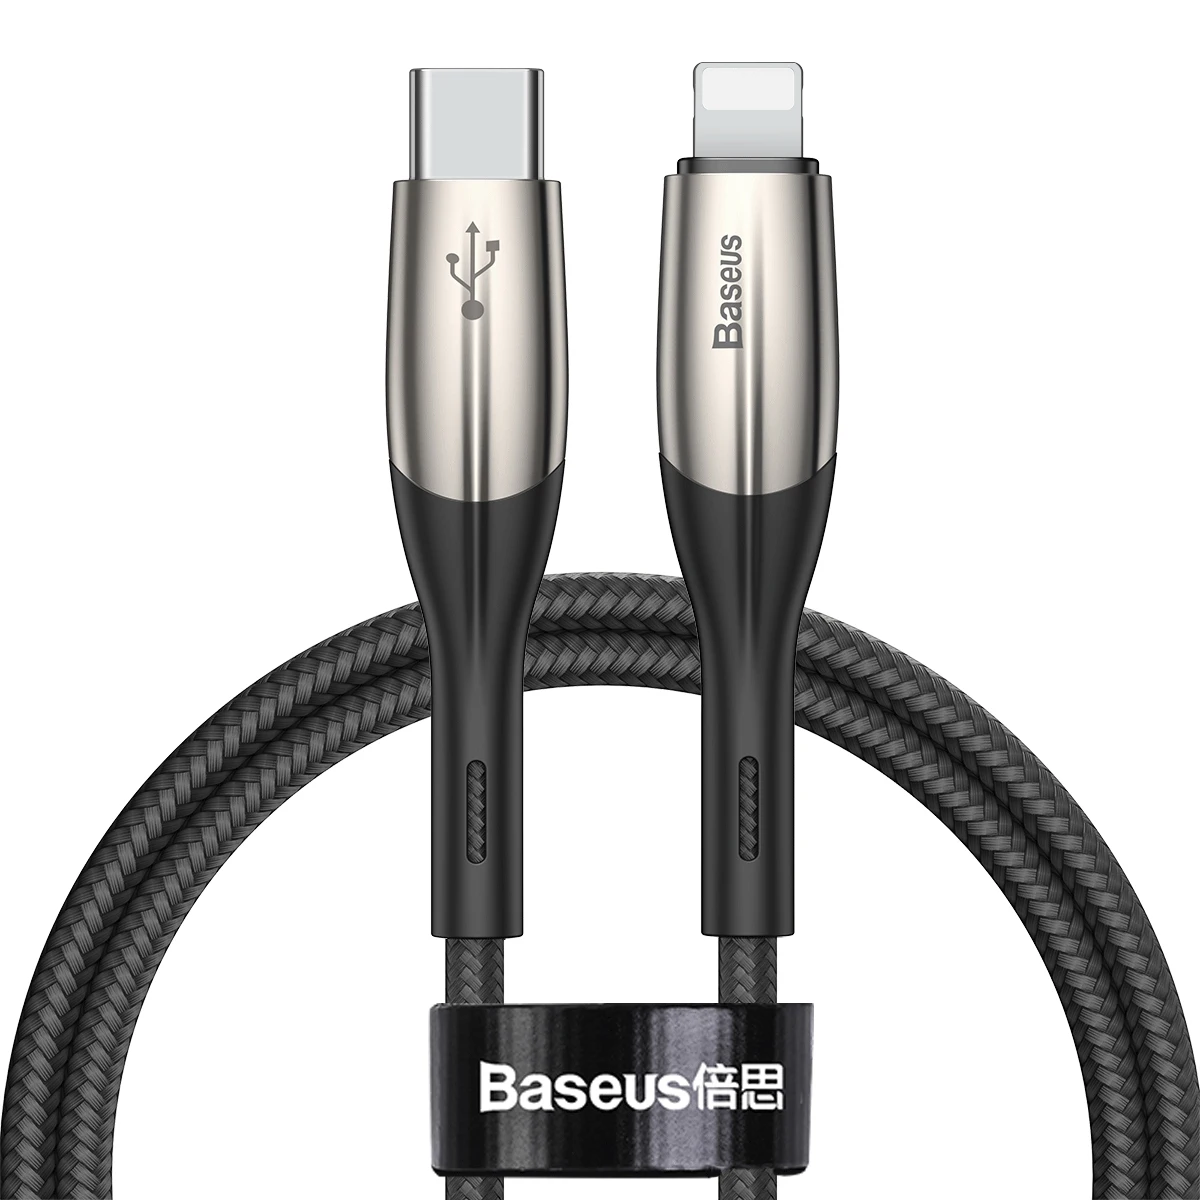 Baseus usb type C для Lightning USB кабель для iPhone 11 Pro Max Xs Max X 8 Plus 18 Вт PD Быстрая зарядка зарядное устройство для iPhone шнур - Цвет: Black